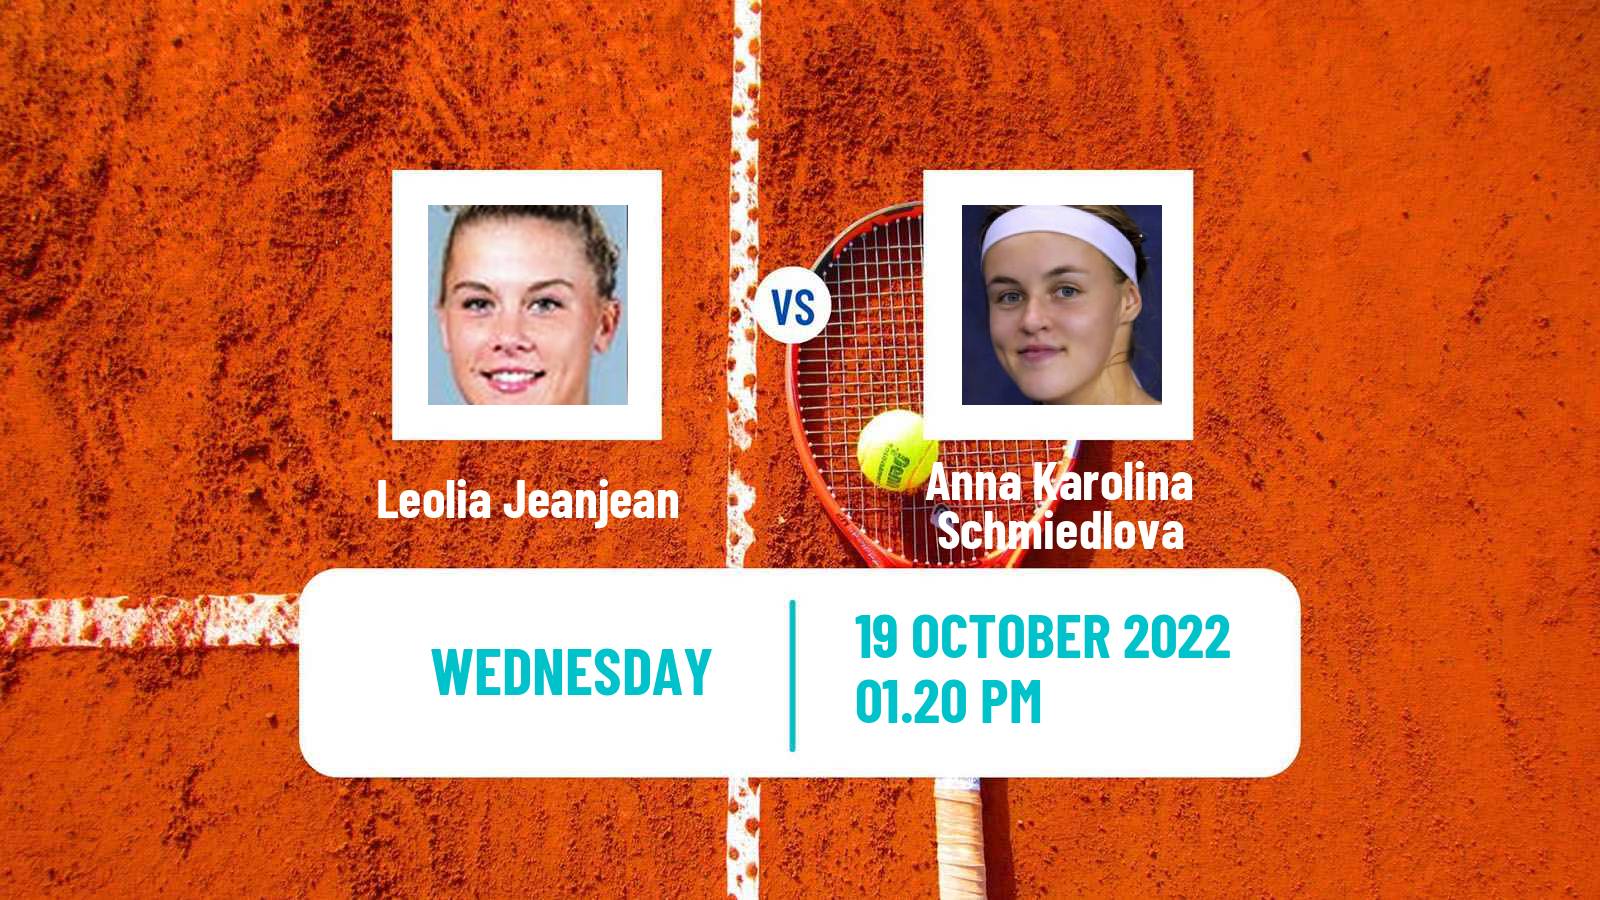 Tennis ATP Challenger Leolia Jeanjean - Anna Karolina Schmiedlova